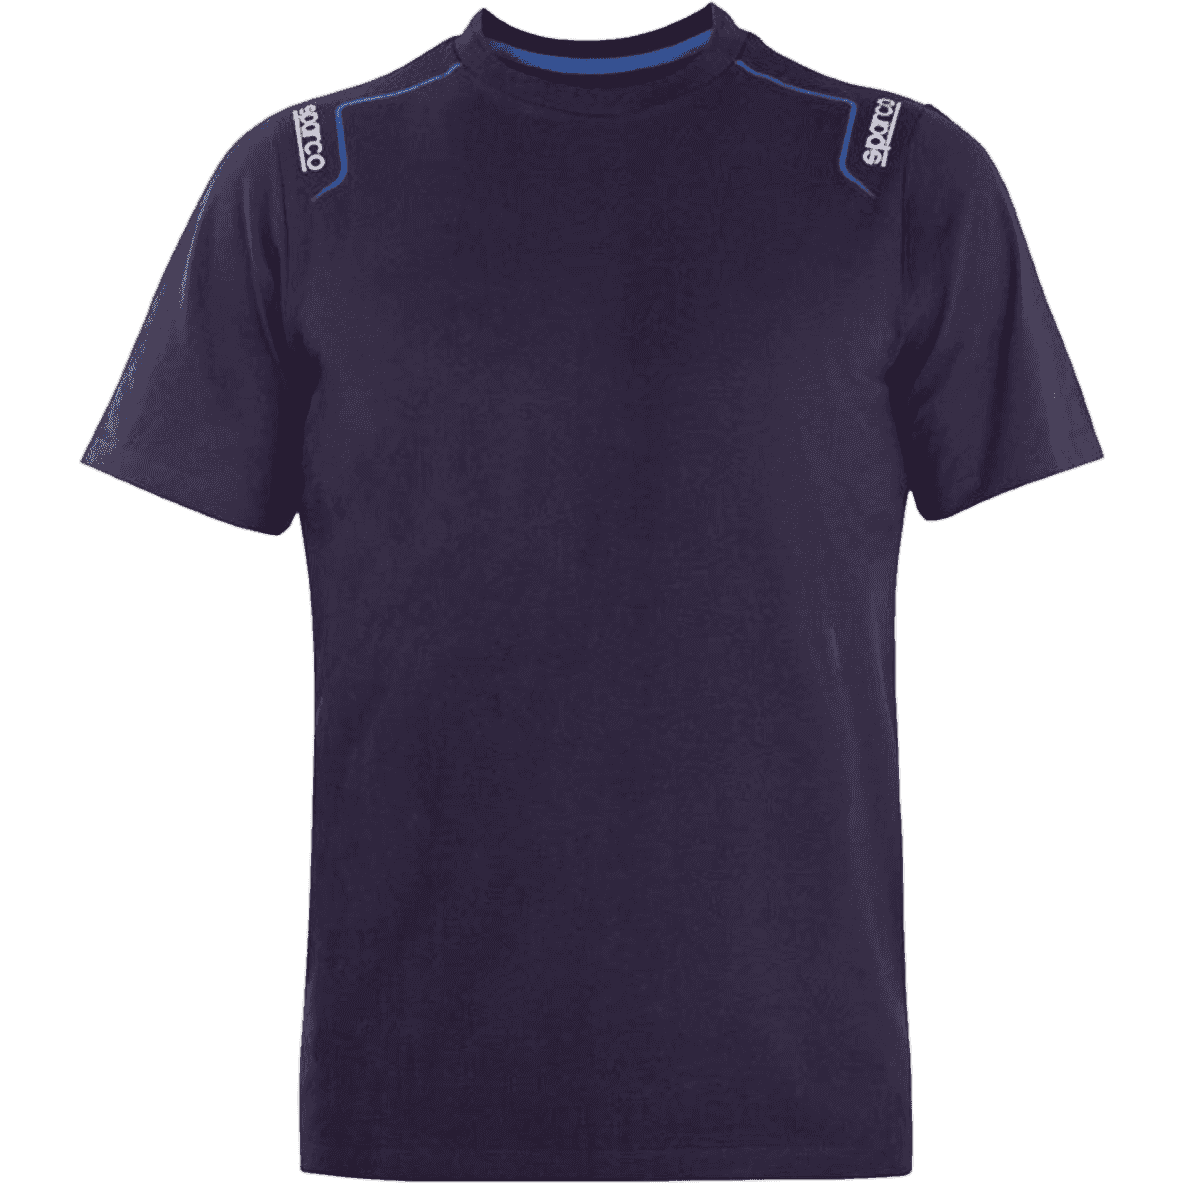 eng_pl_Mens-Sparco-T-shirt-TRENTON-navy-16941_1.png